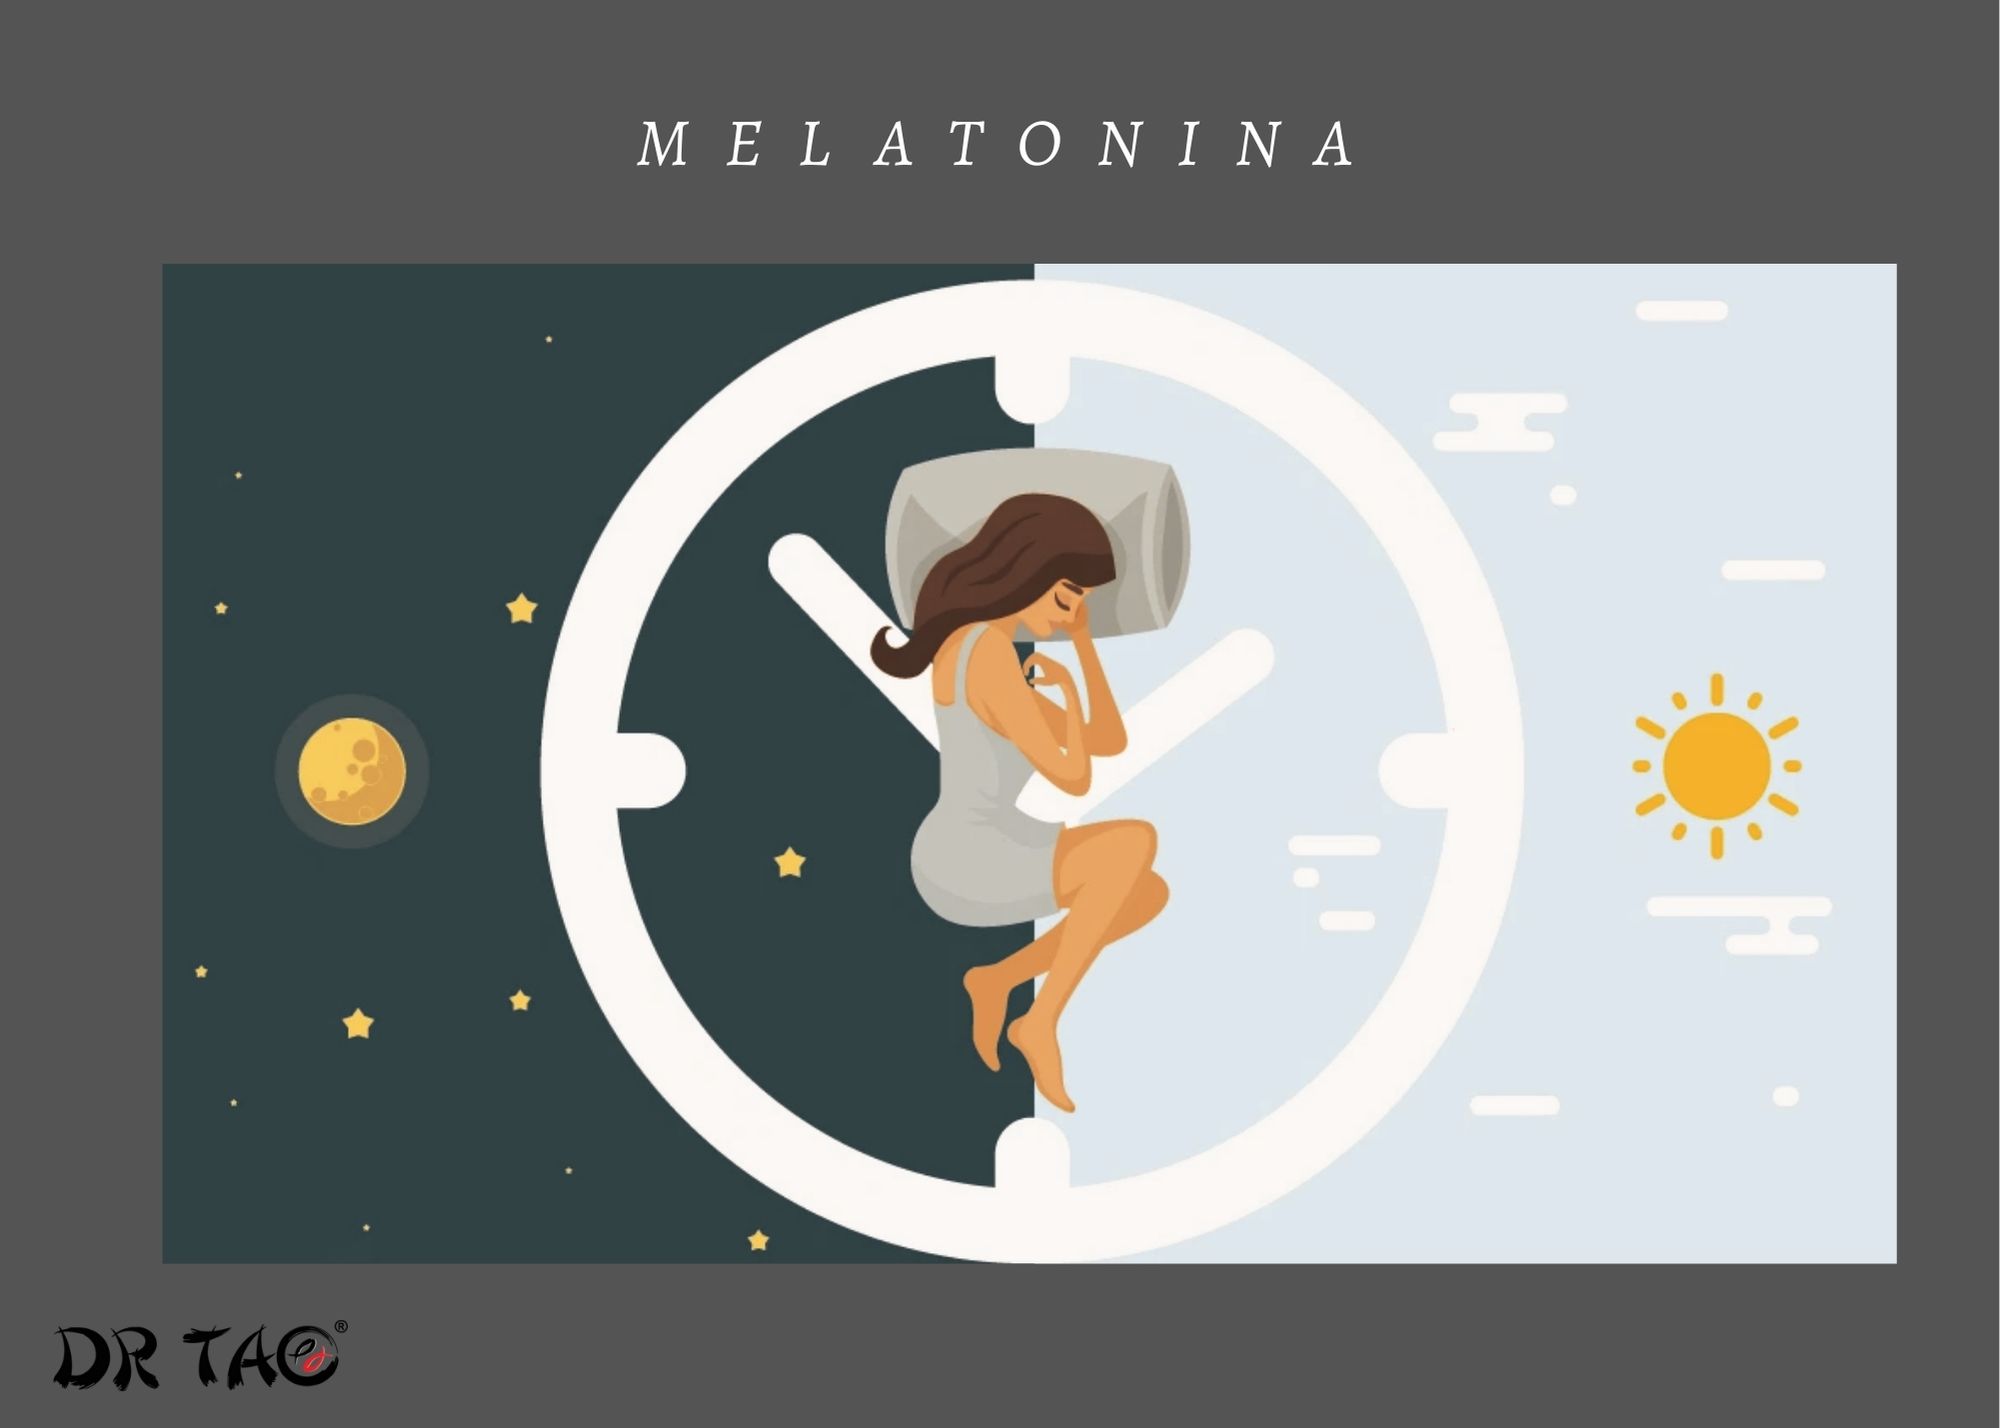 La melatonina y sueño profundo en la vida diaria